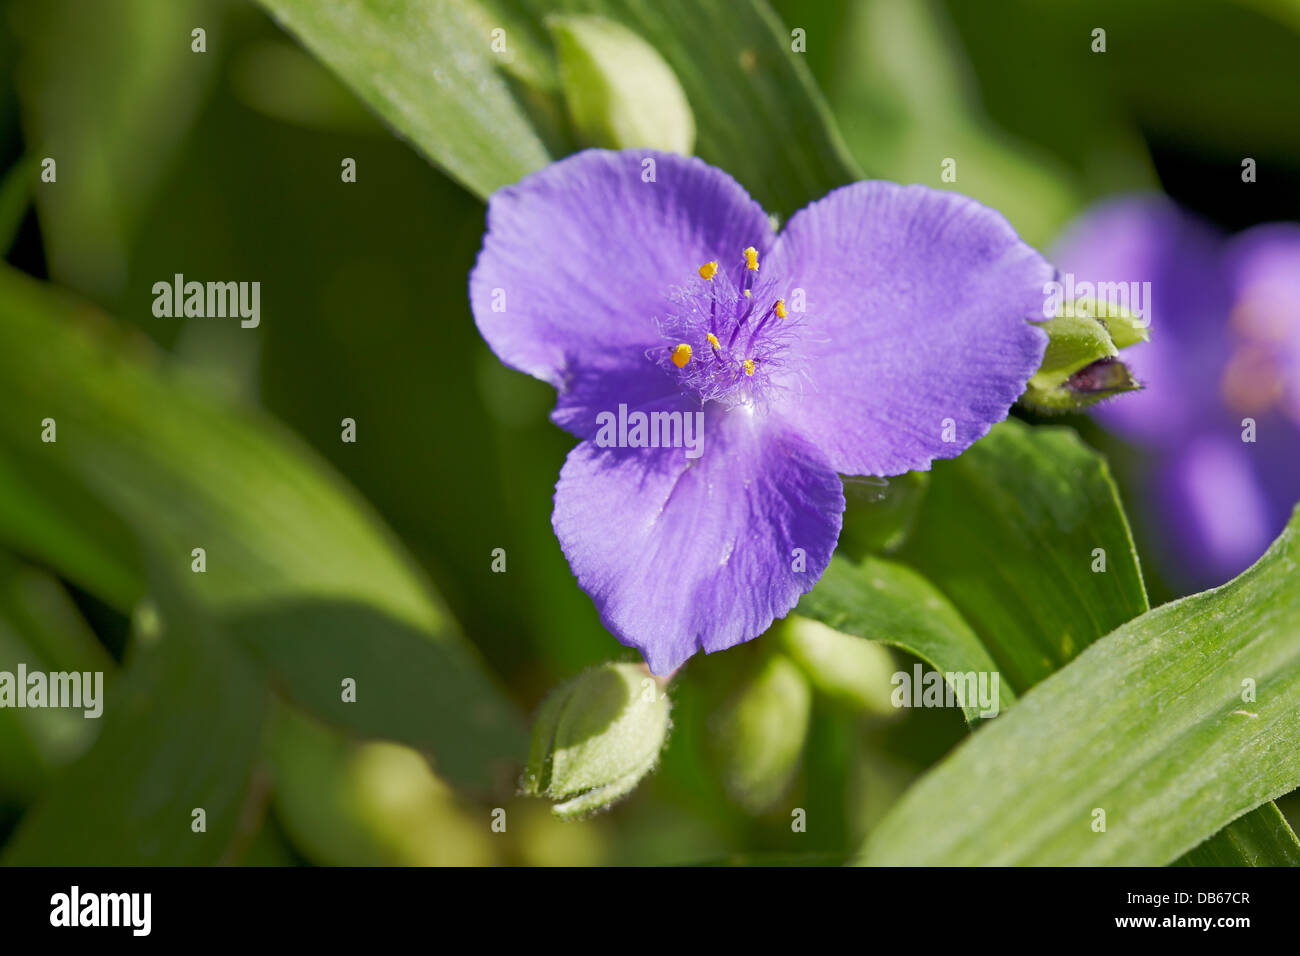 Virginia spiderwort flower close up. Scientific name: Tradescantia virginiana. Stock Photo